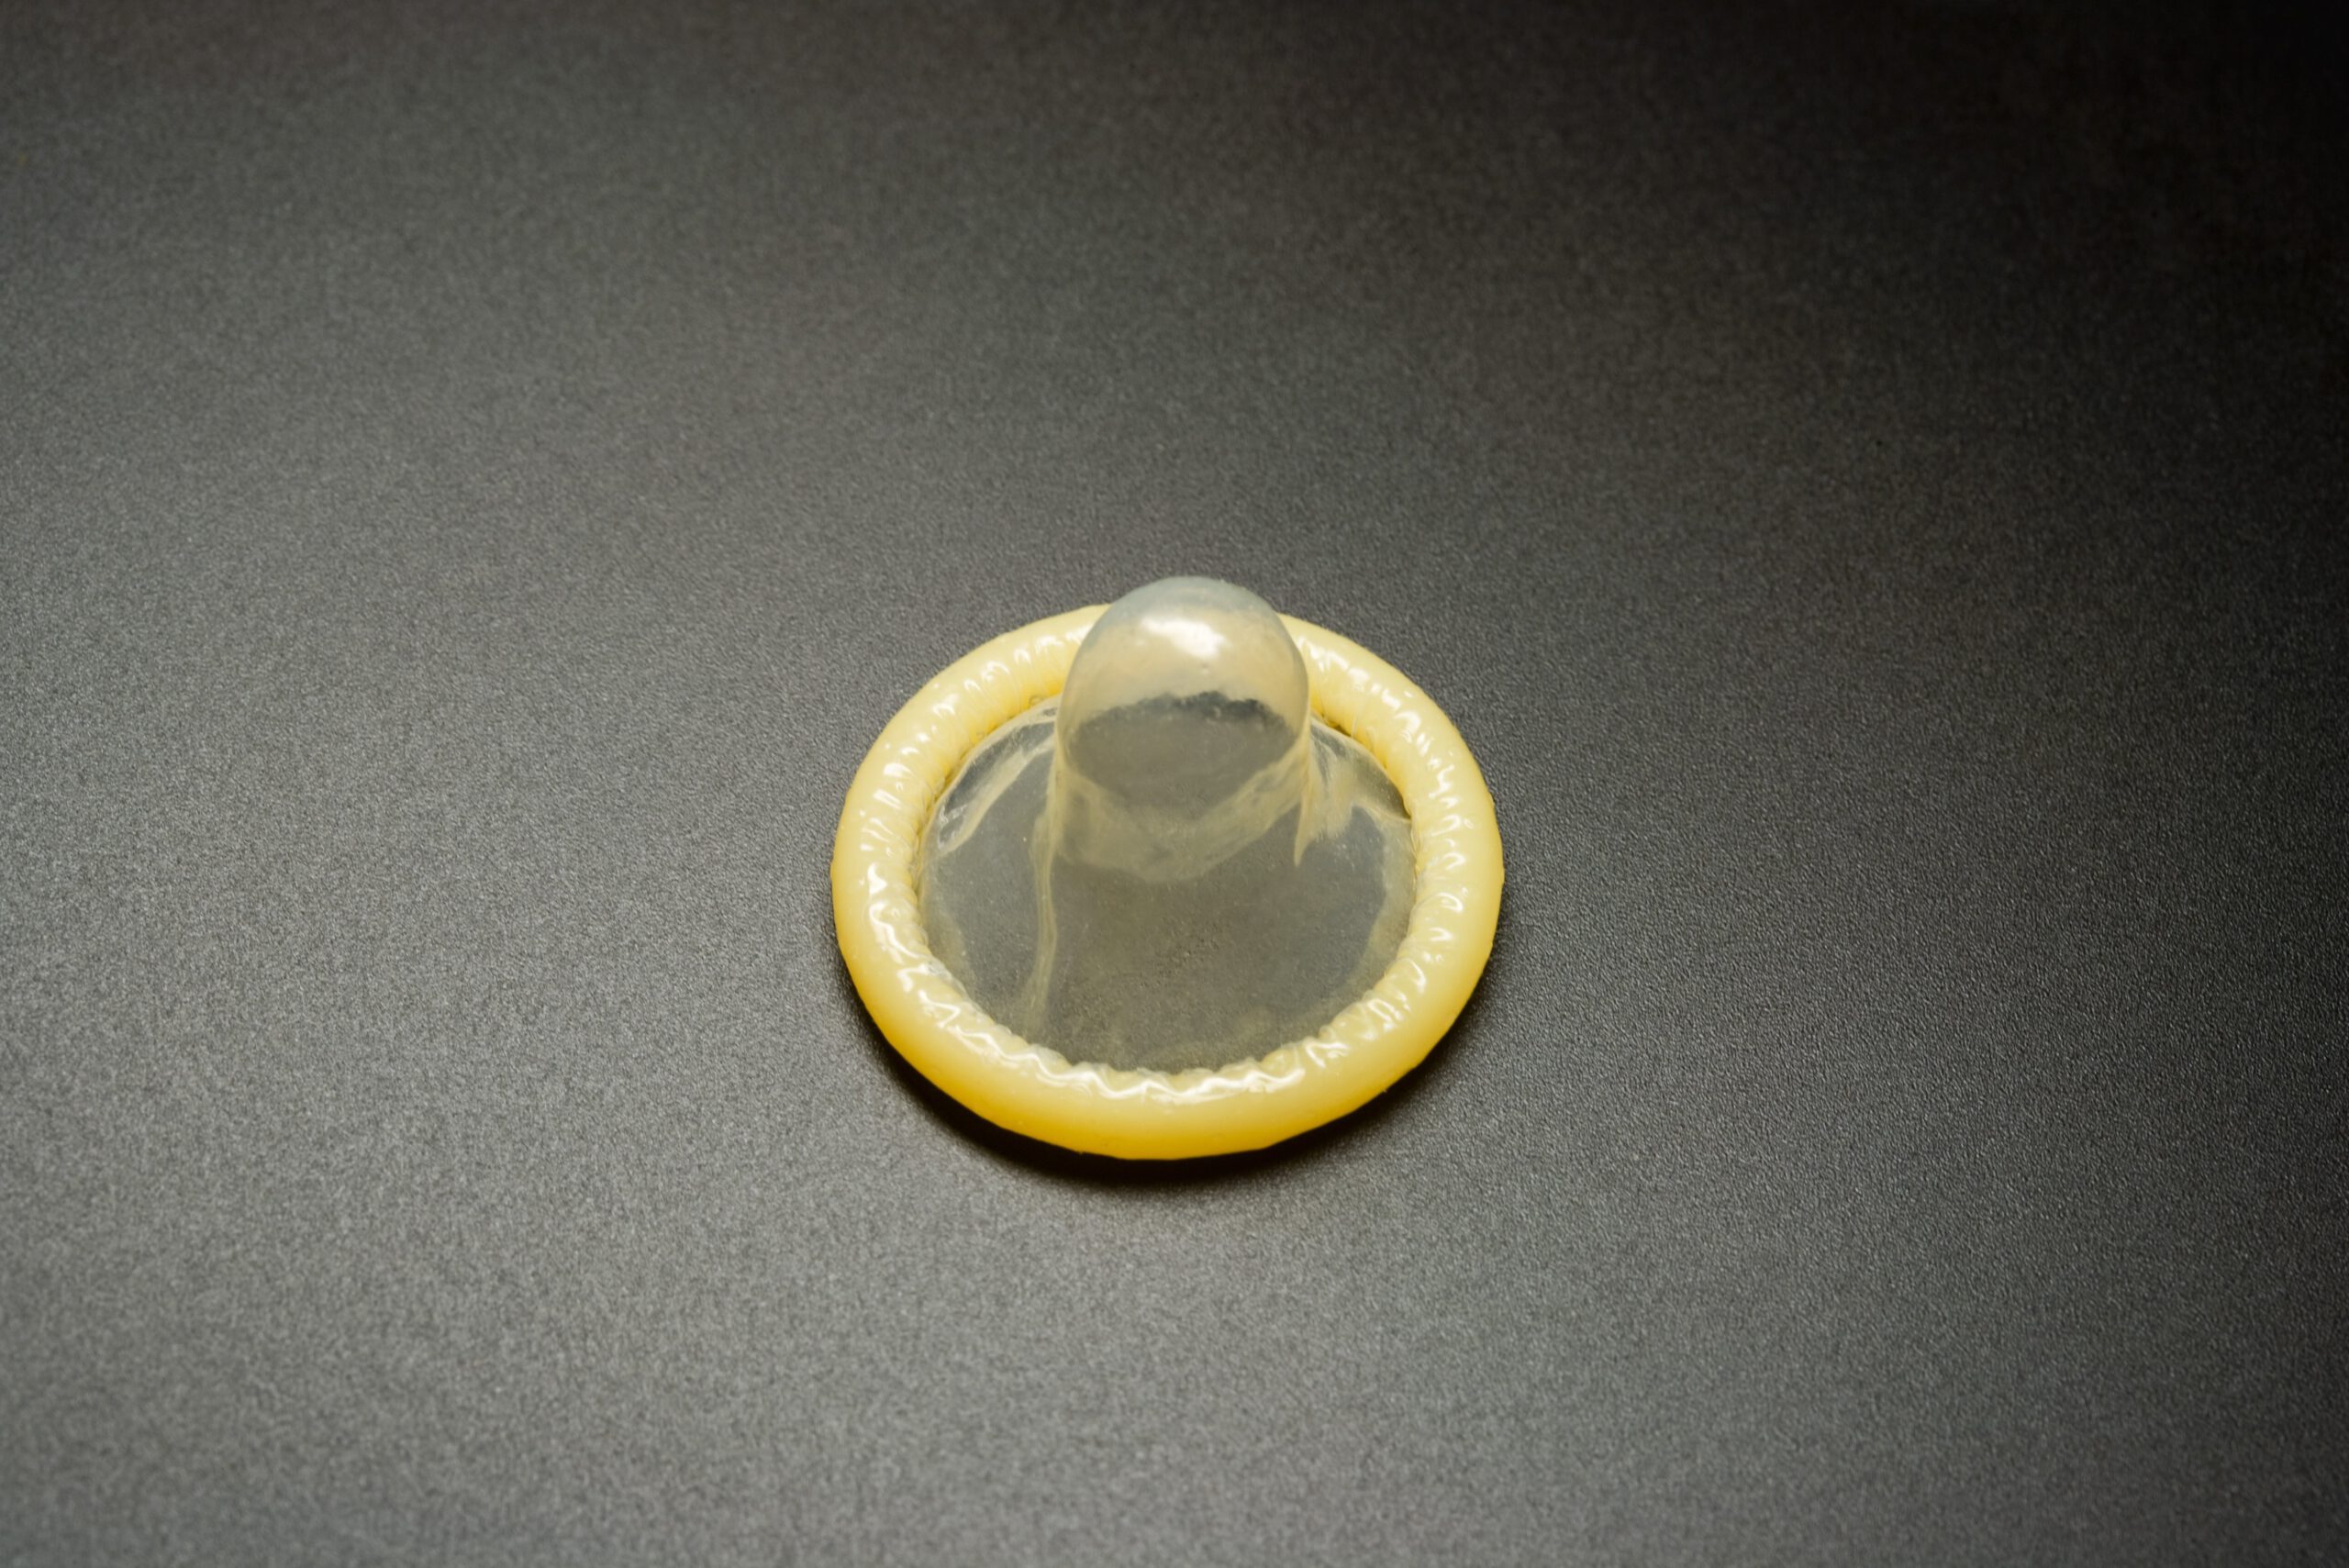 yellow condom on black background